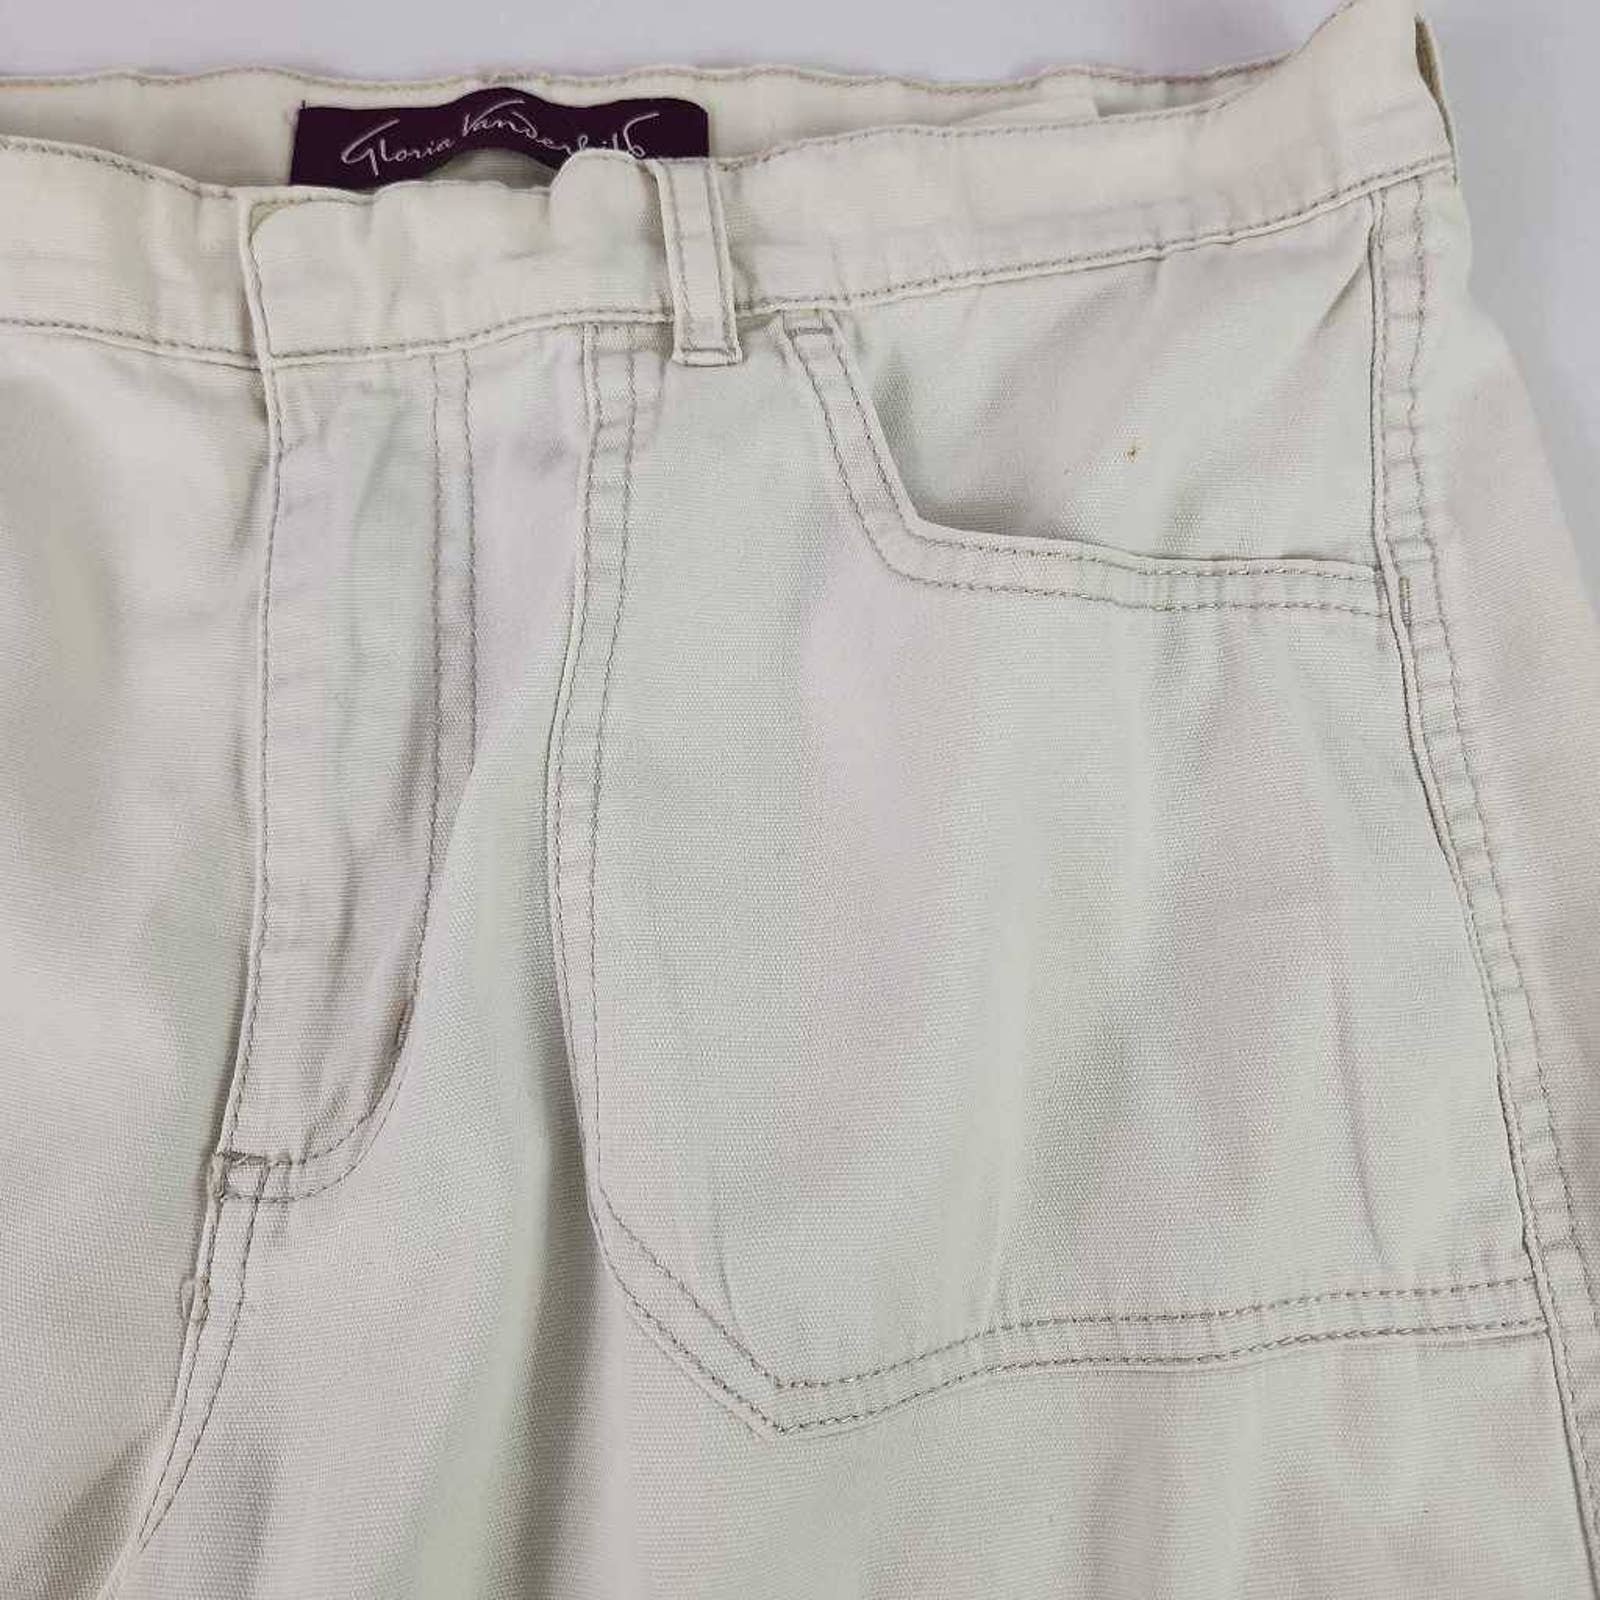 the Lowest price Gloria Vanderbilt Womens Capri Pants Beige Pockets Twill Cropped Khaki Summer 10 JiLGkjt4h Fashion